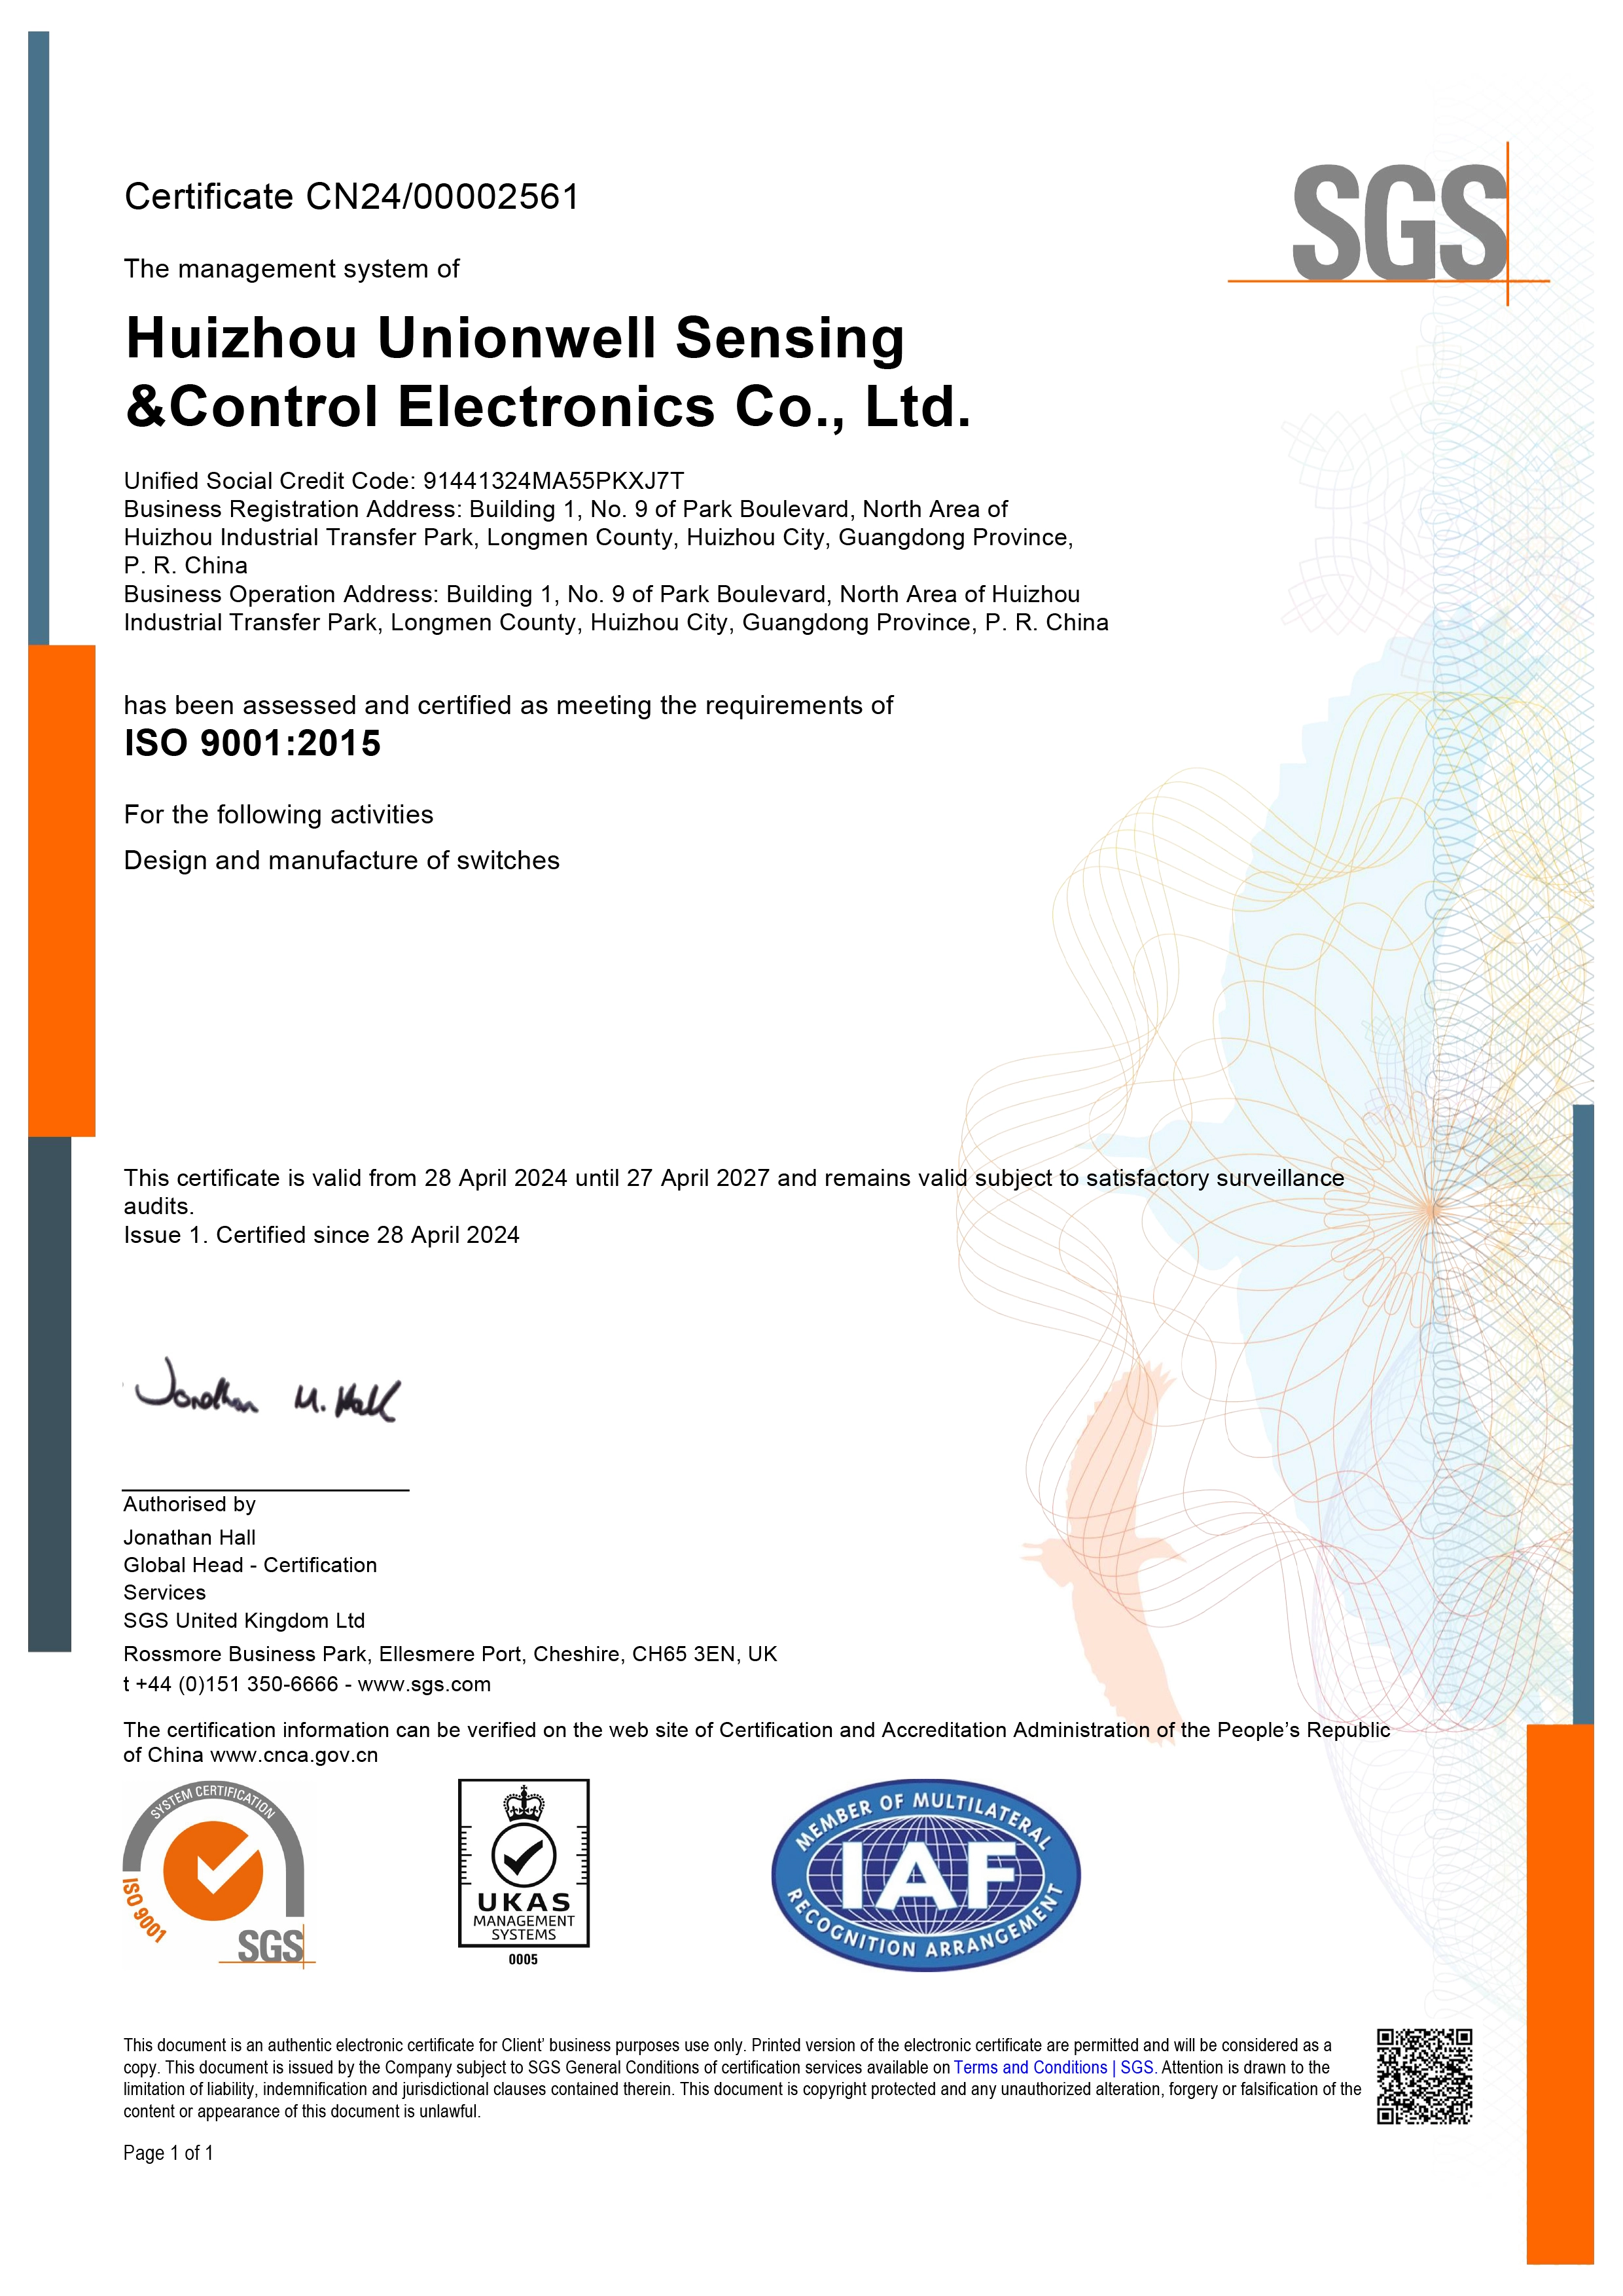 unionwell iso9001 certificate 1